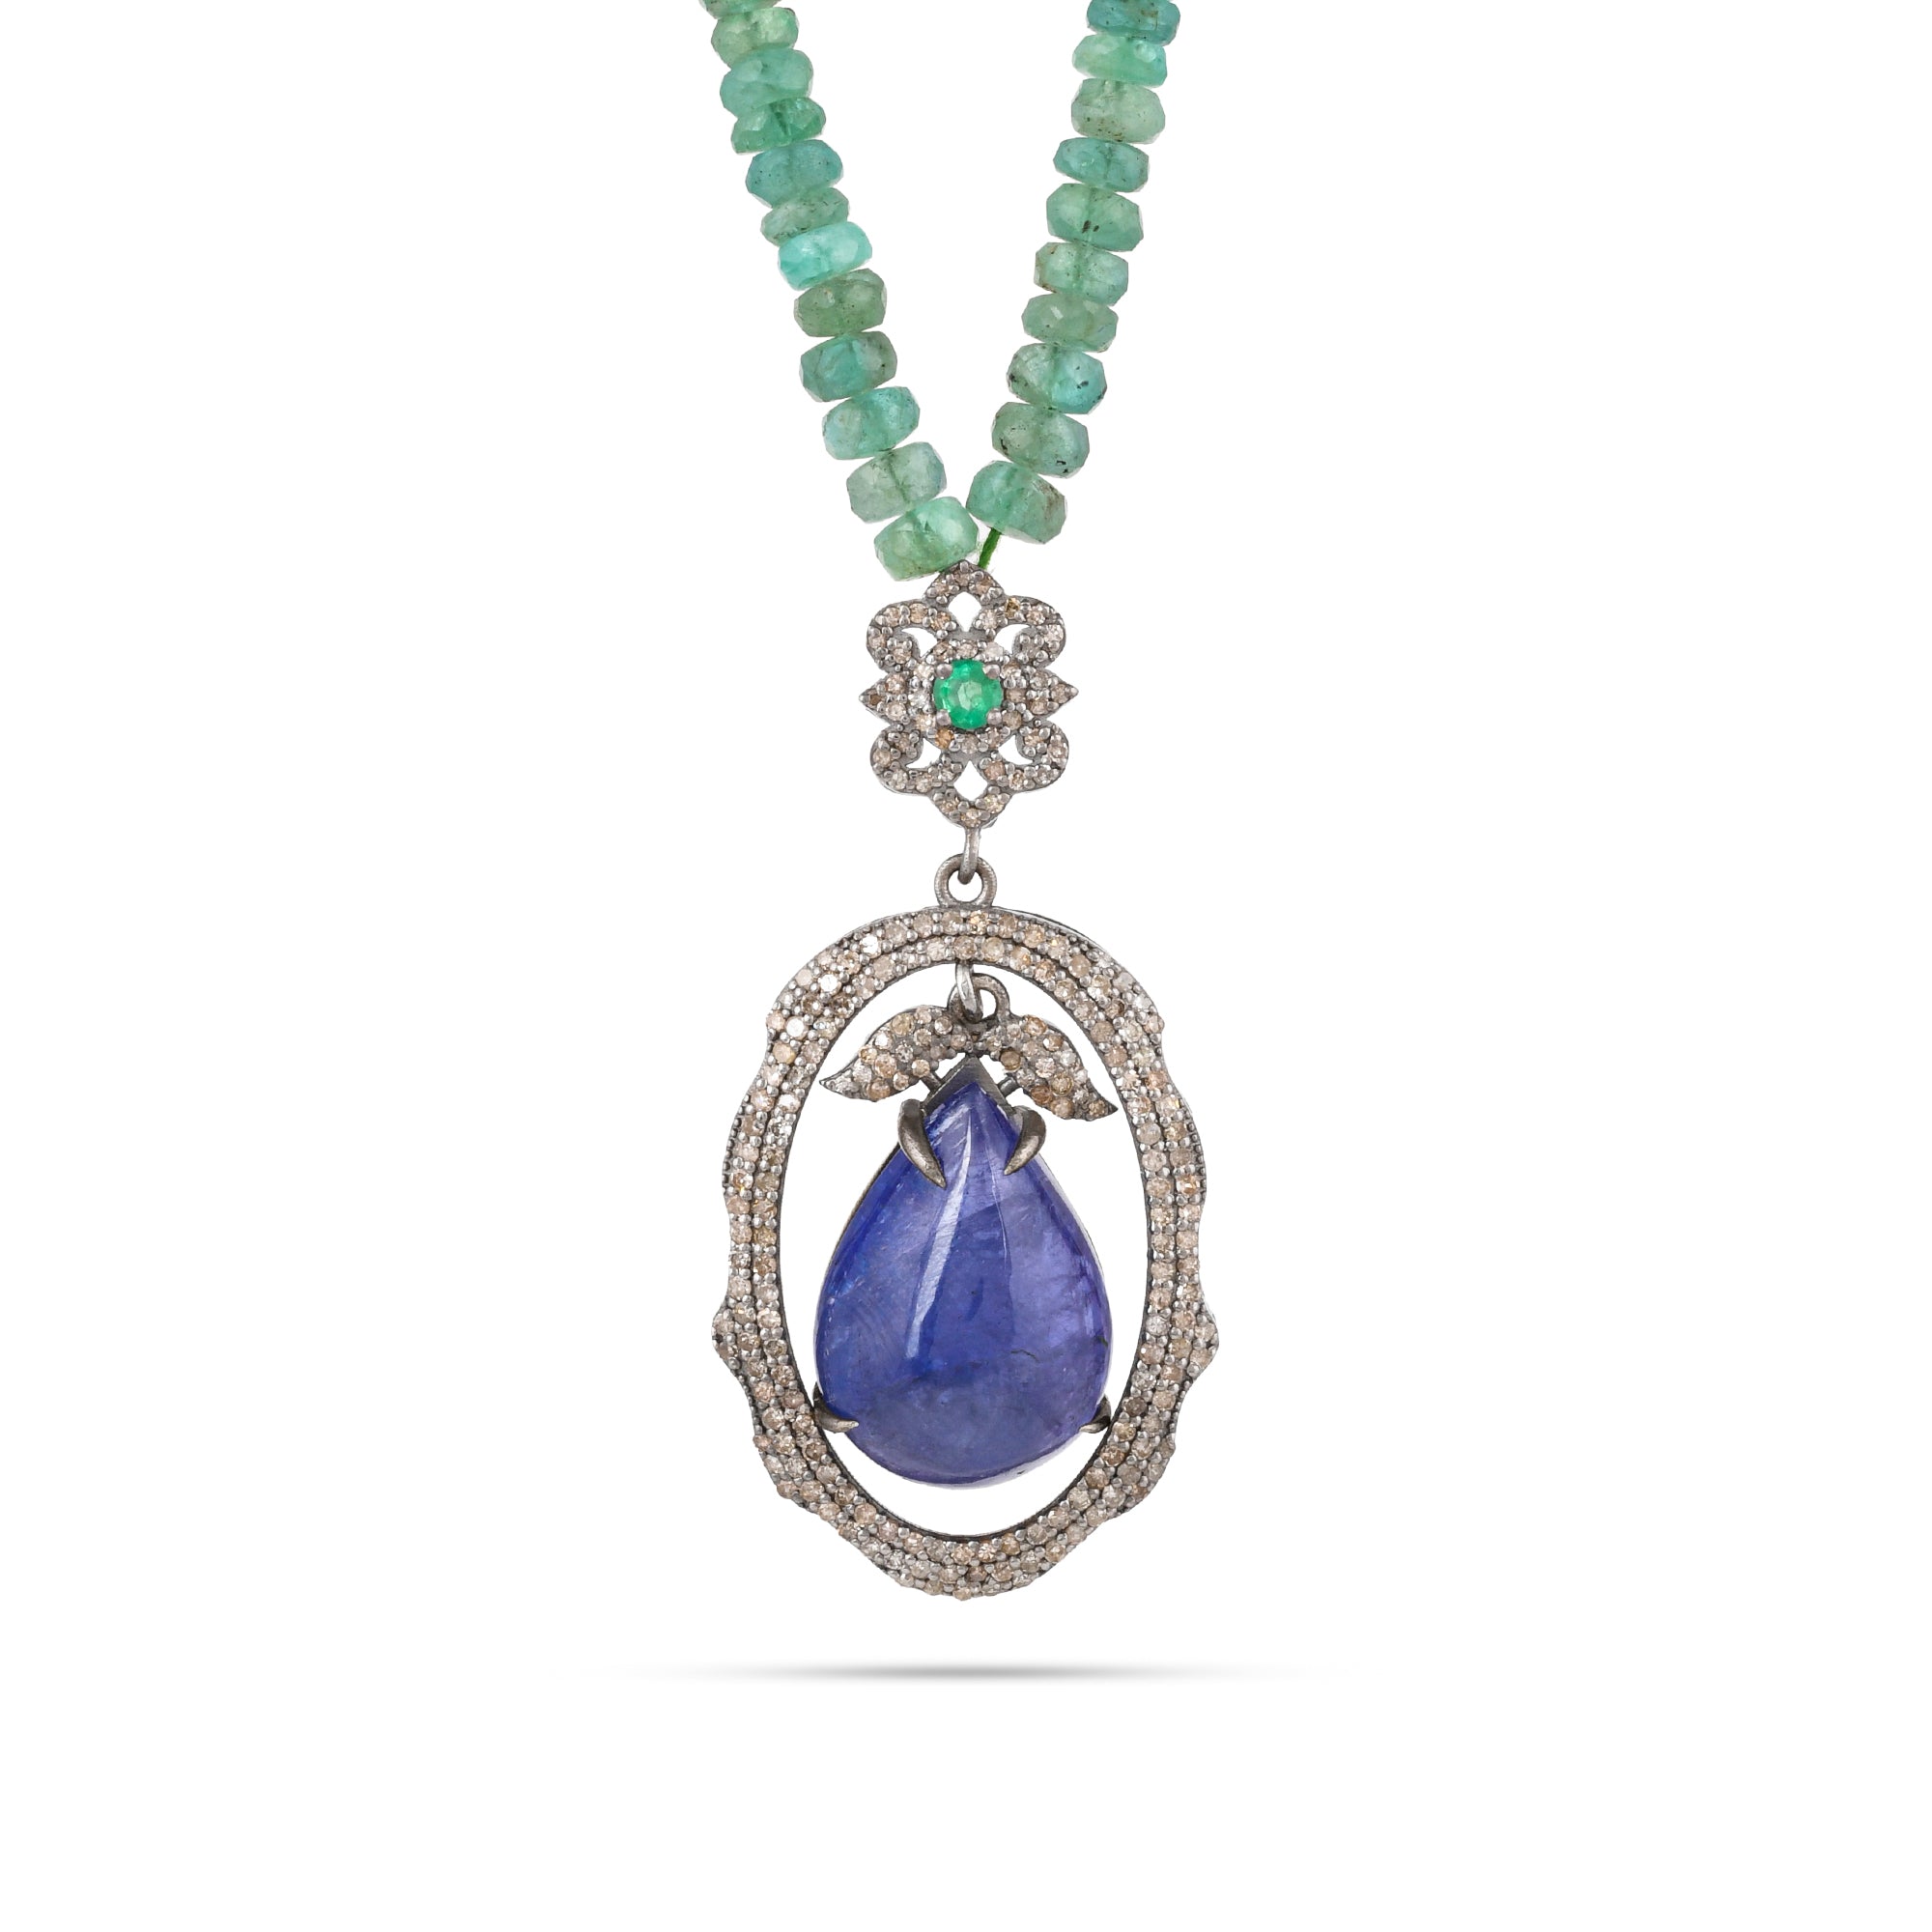 Tanzanite with diamond pendant with Emerald chain necklace